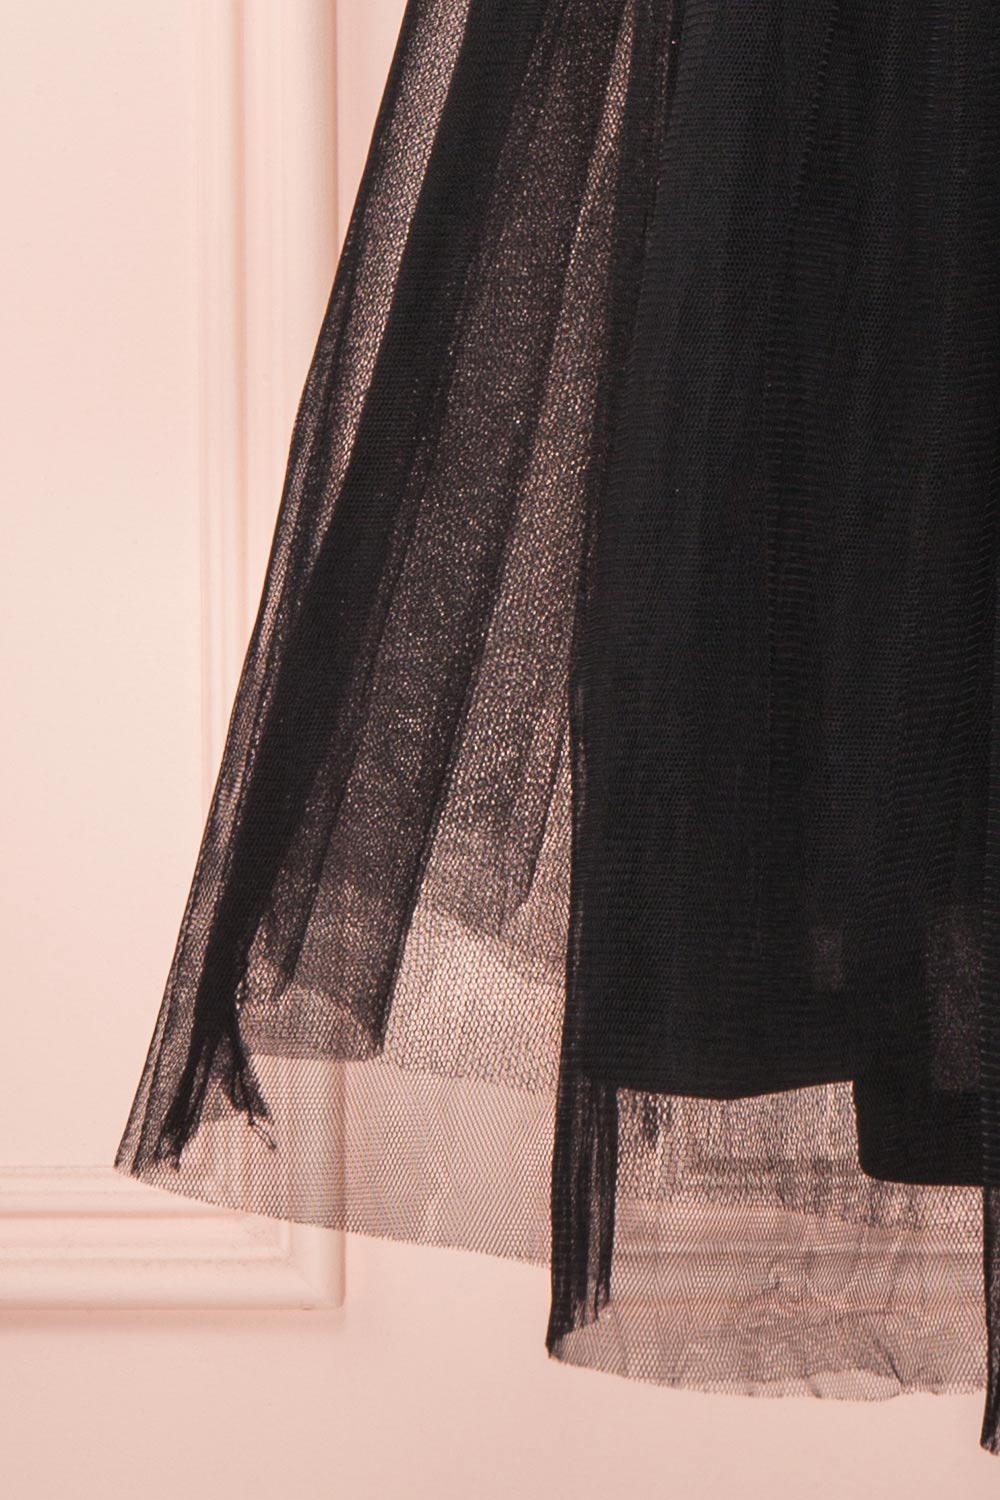 Kiyosu Mûre | Robe en Tulle Noire